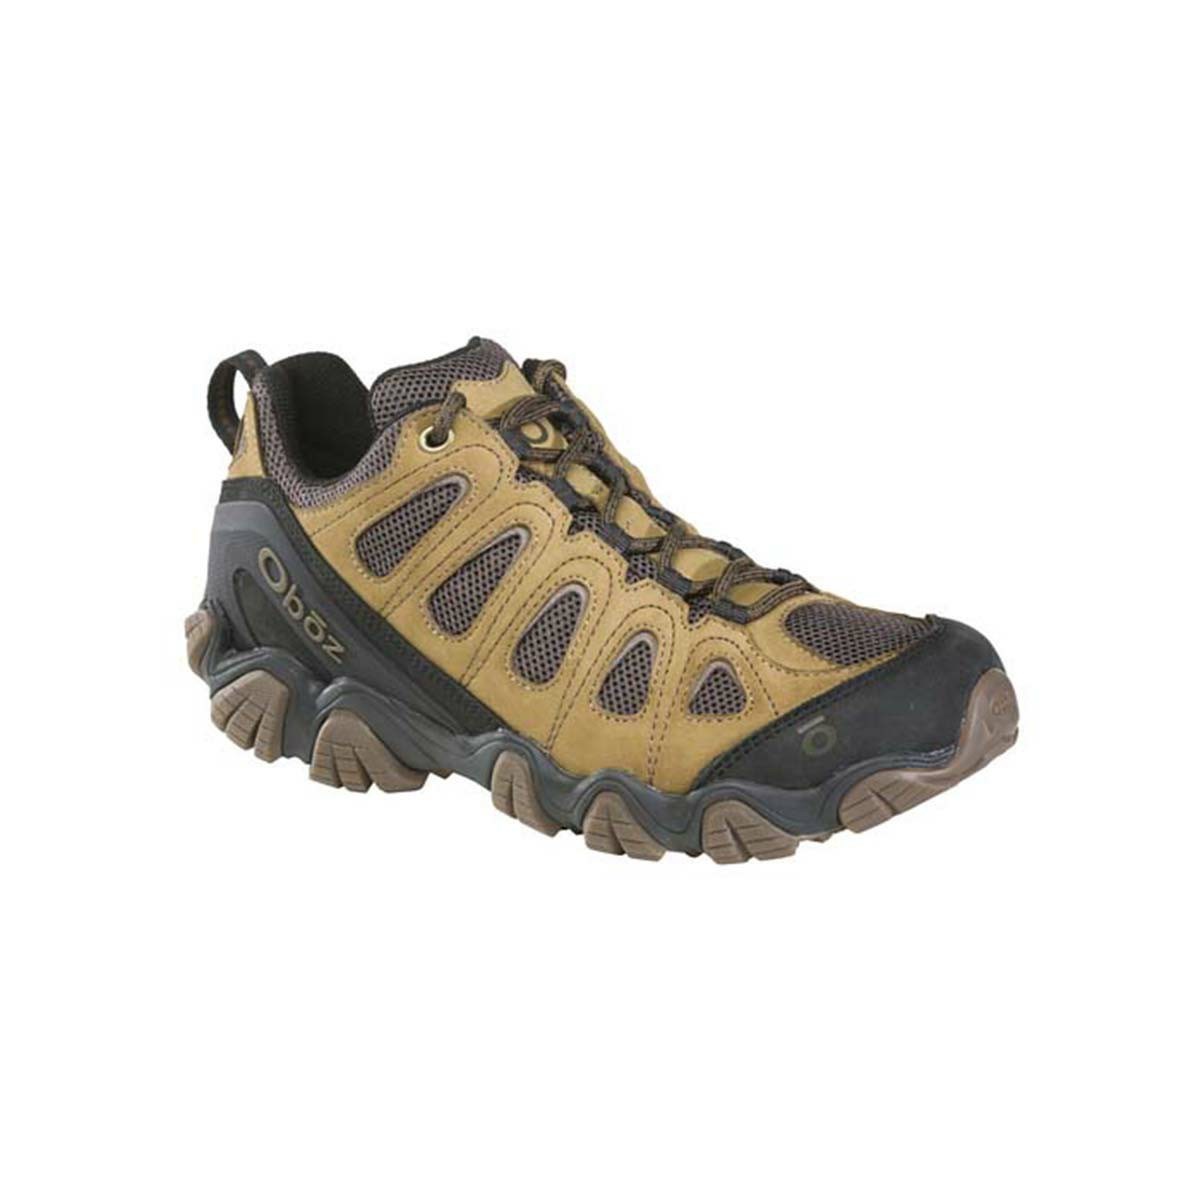 Oboz Hiking Boots Black Friday Sale - Sawtooth II Low Mens Khaki